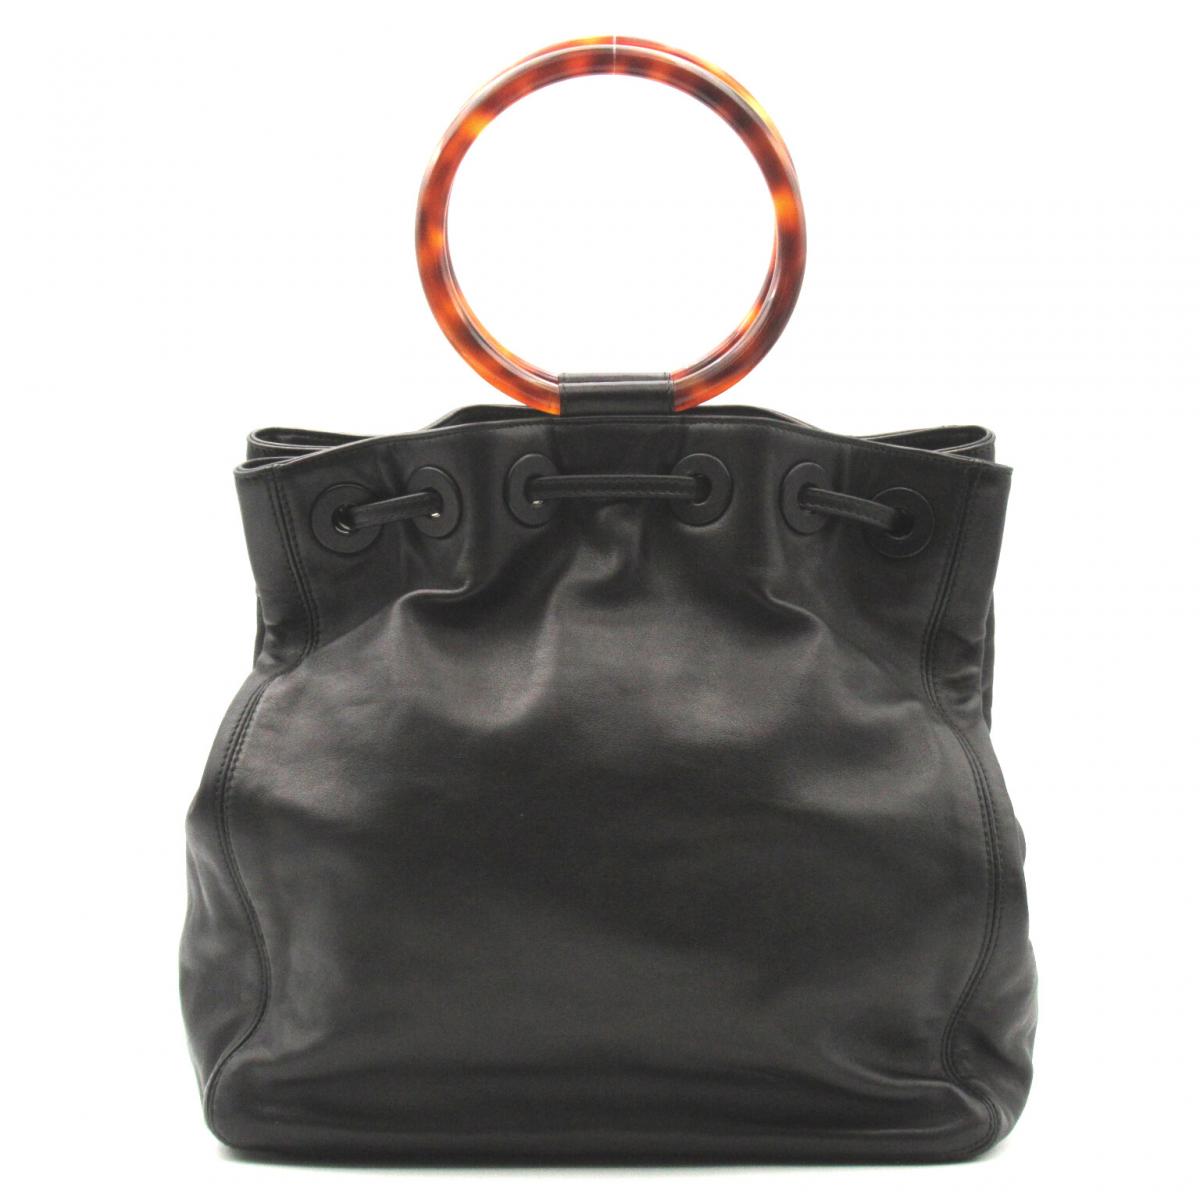 CC Drawstring Ring Handle Bag